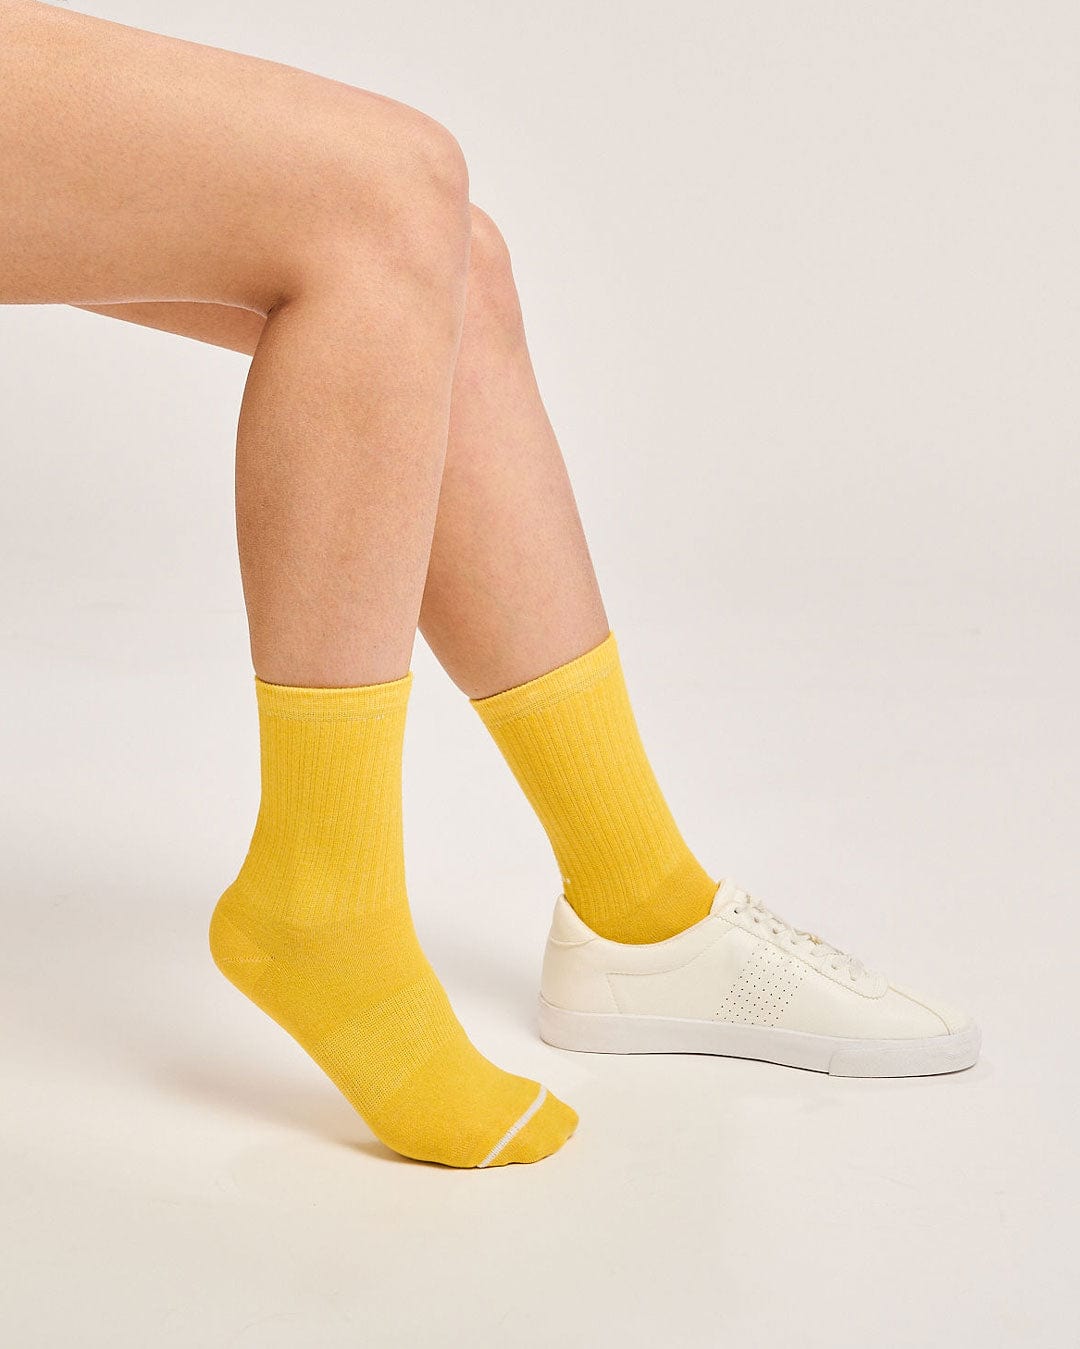 Ecofriendly yellow socks. Fun athletic socks for women